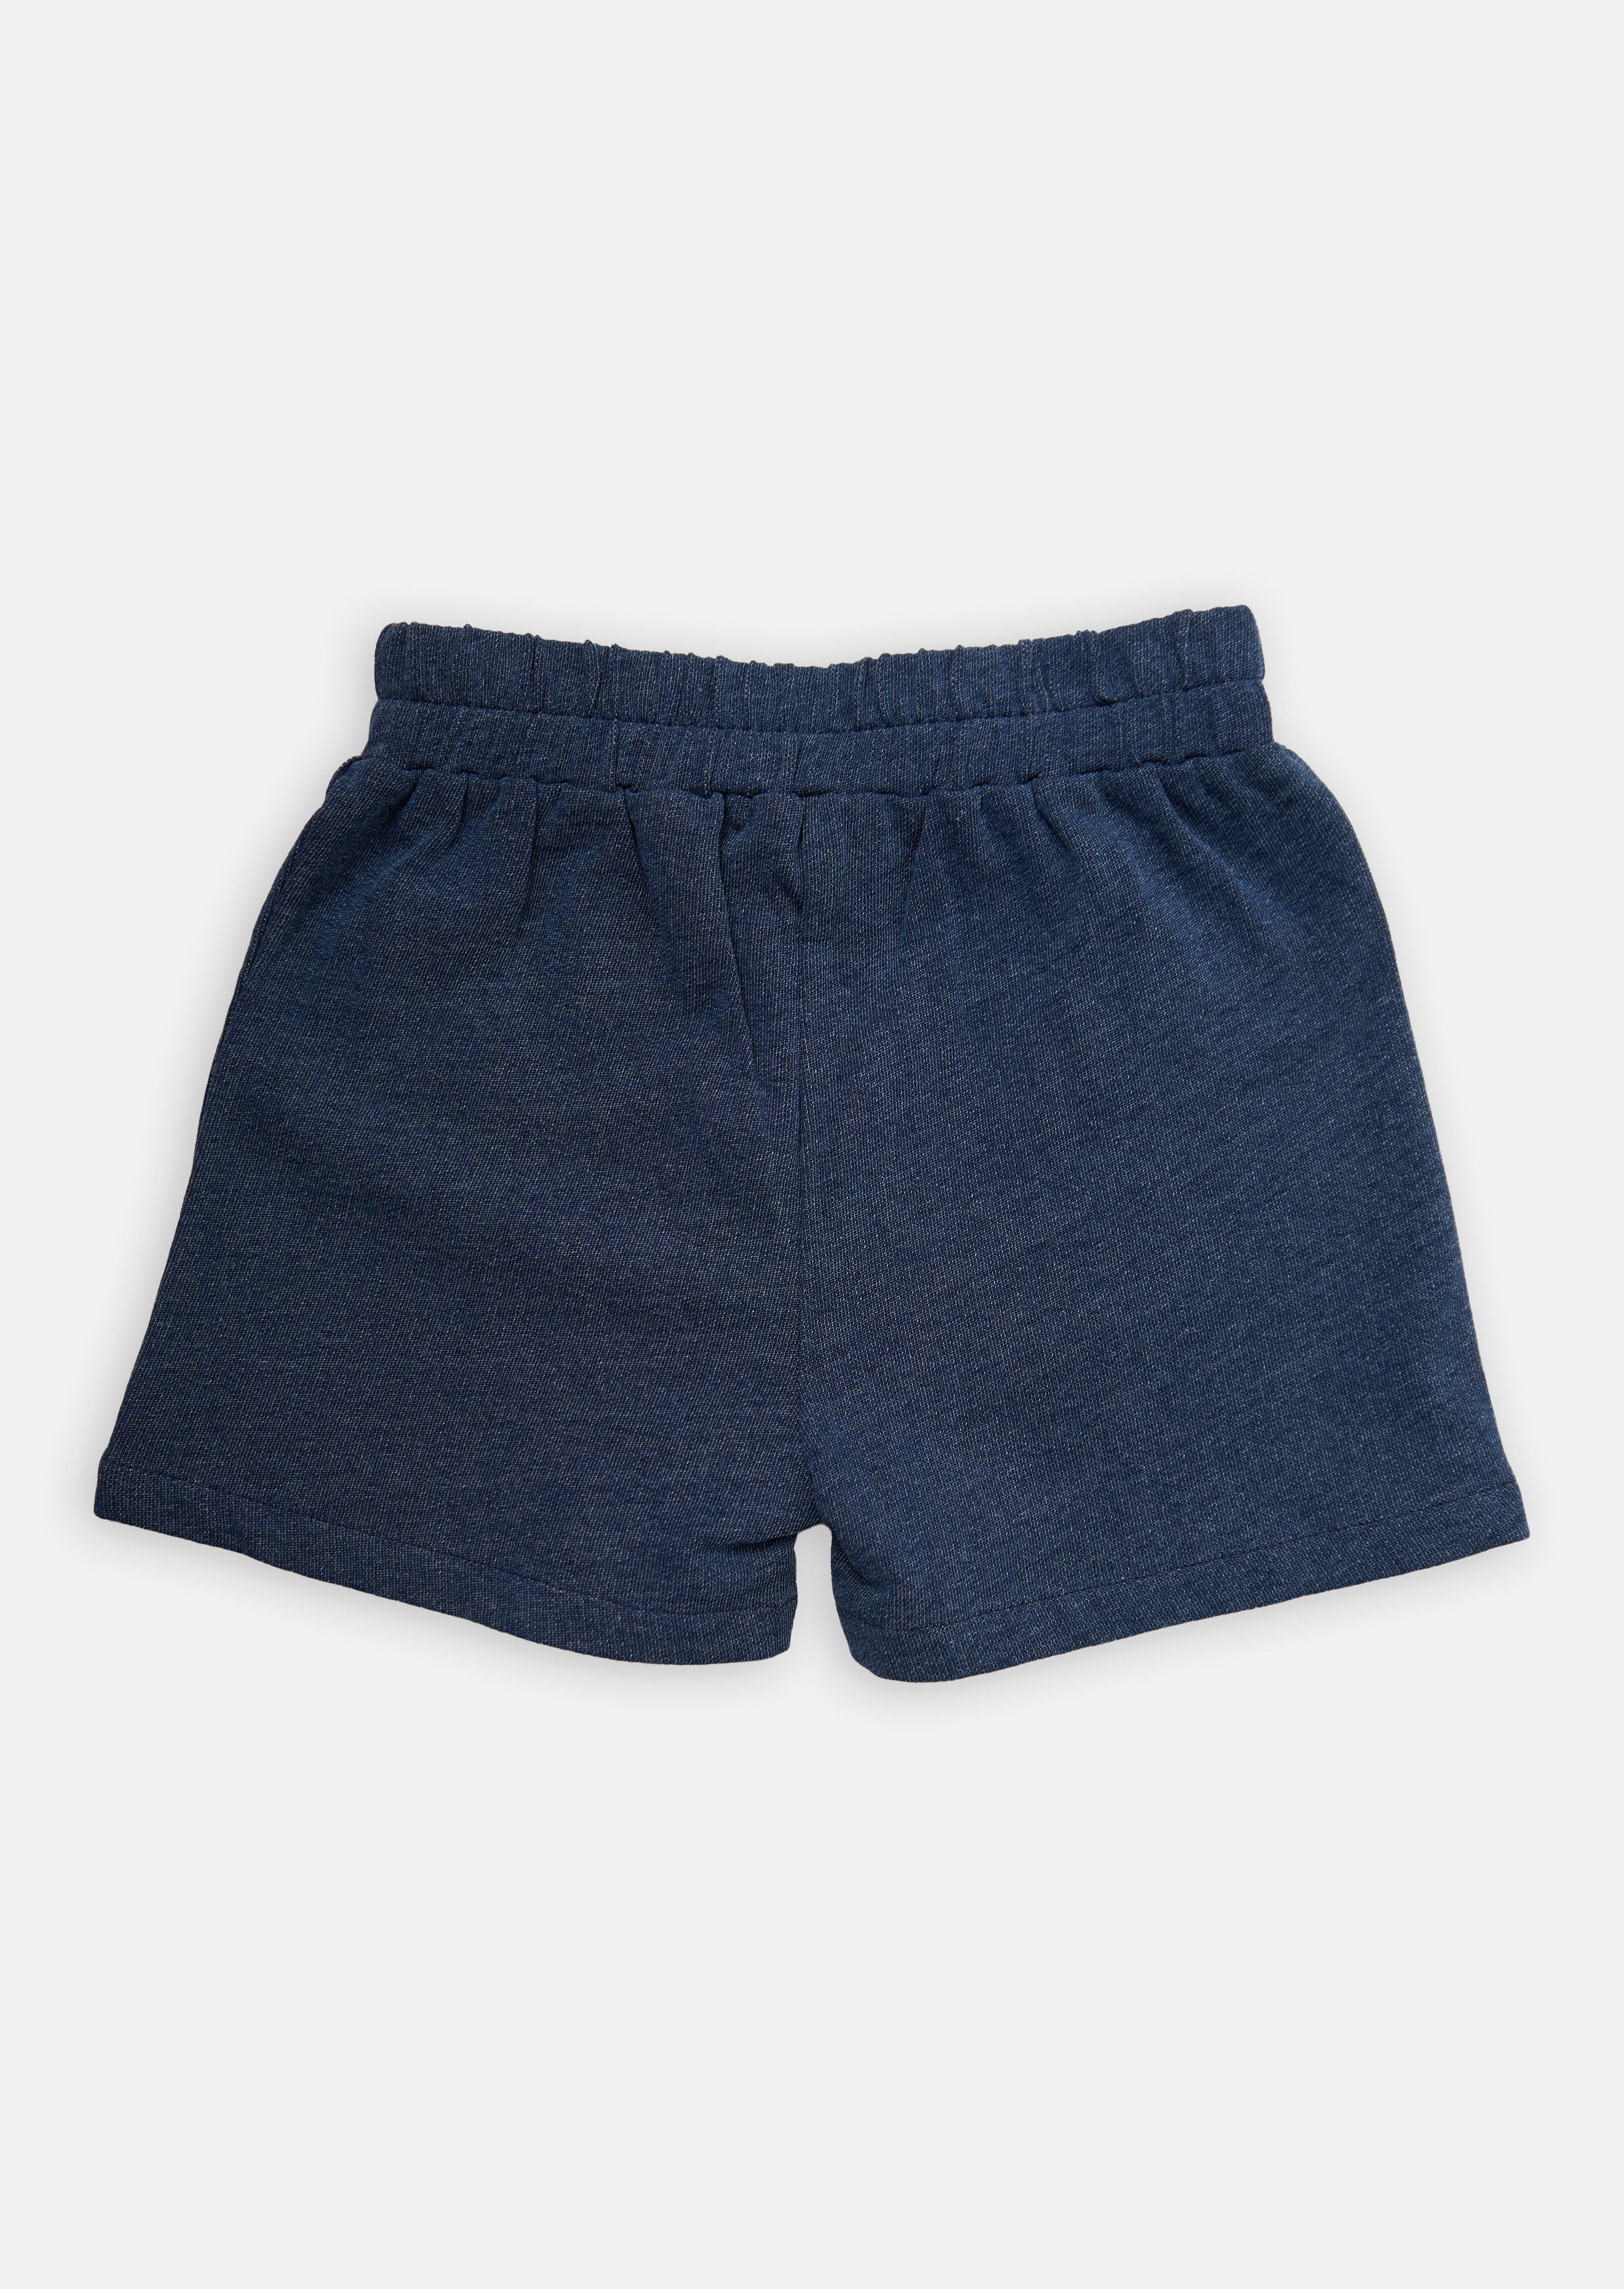 Girls Solid Blue Denim Shorts